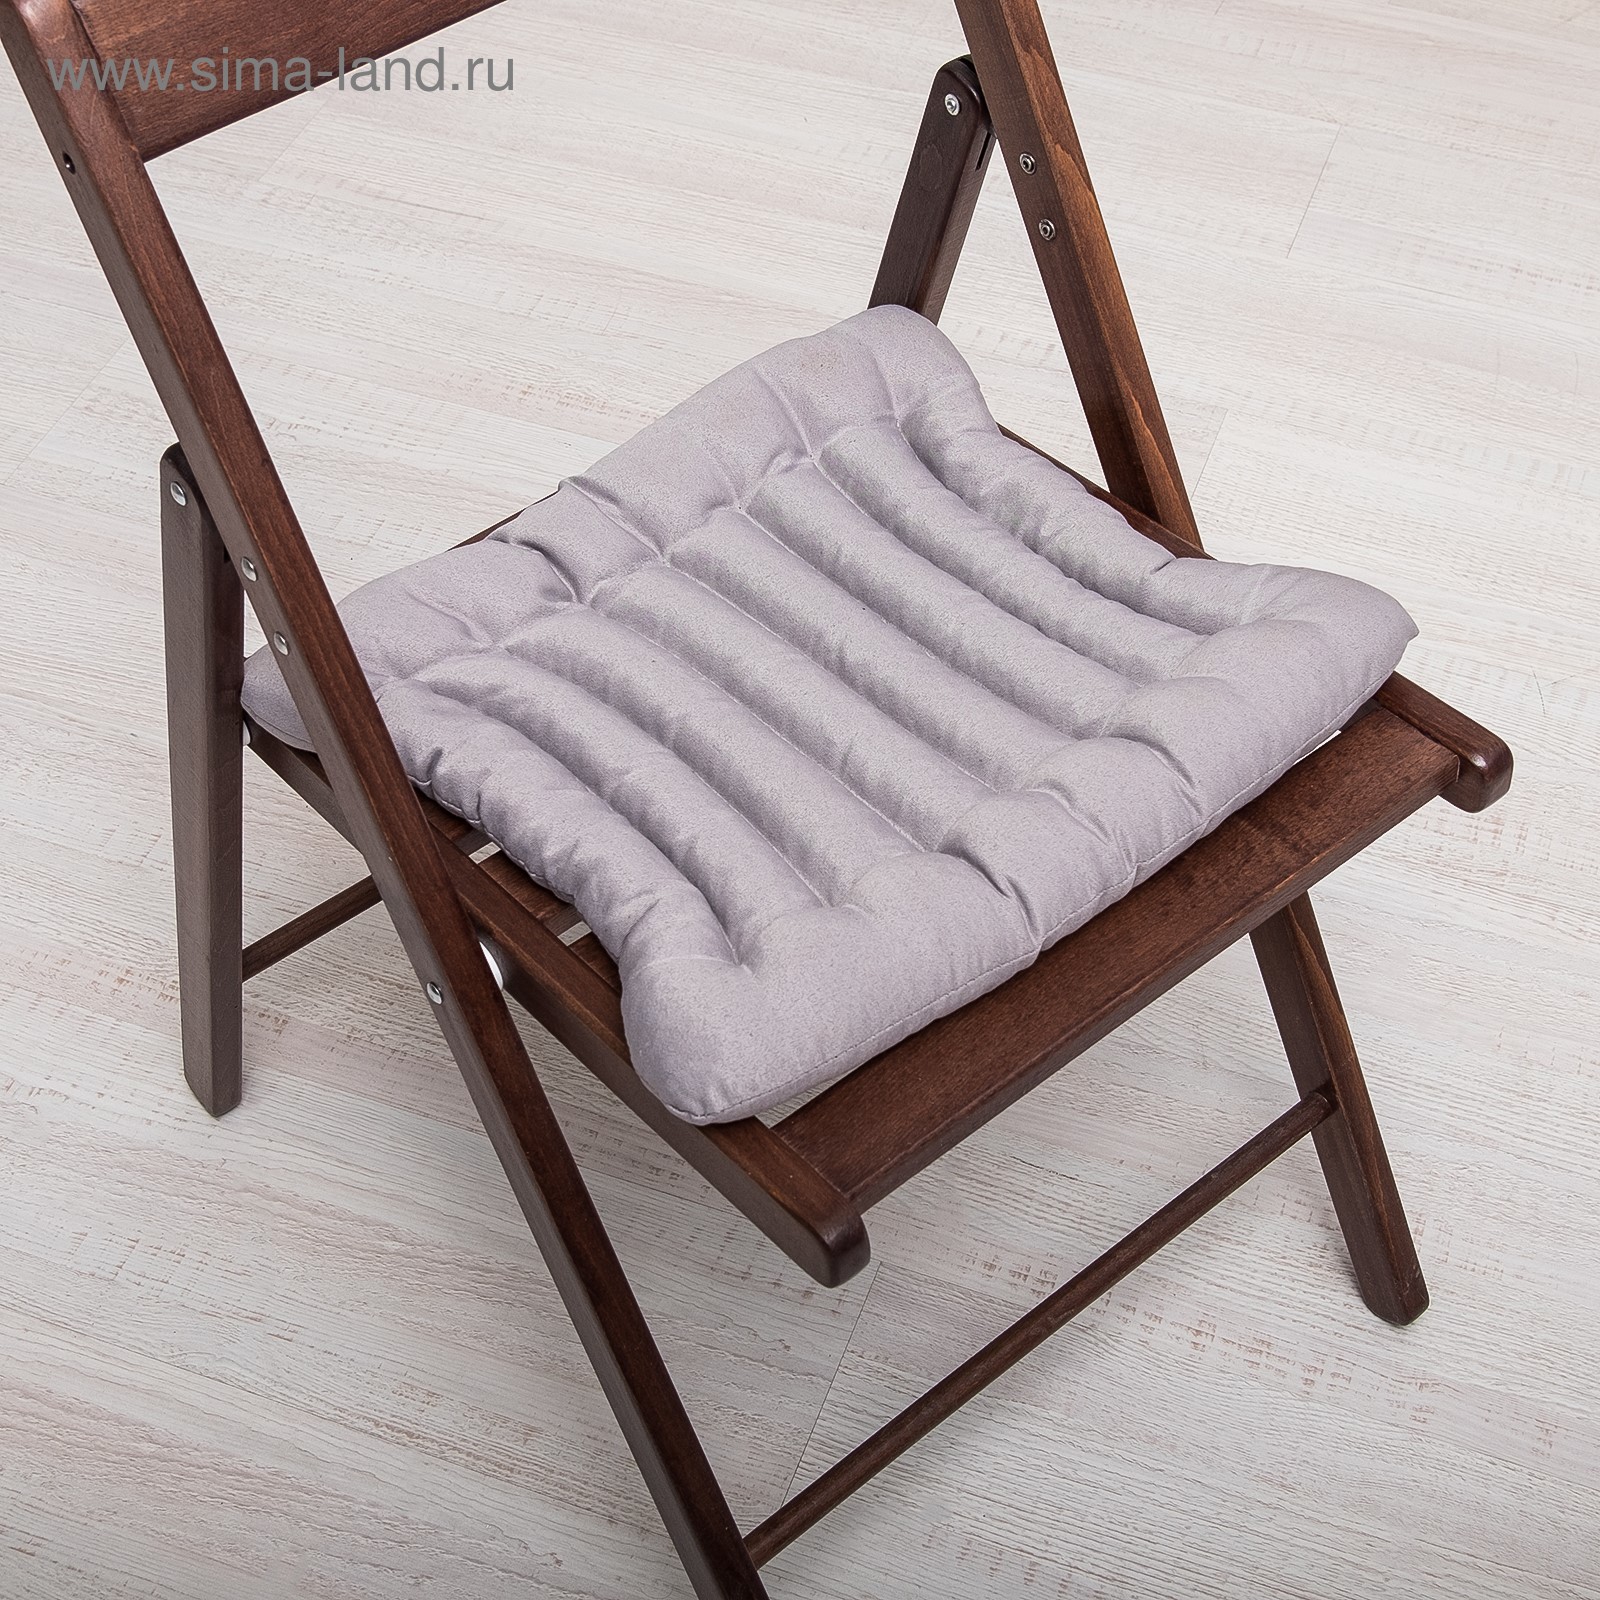 Подушка на кресло из гречневой лузги